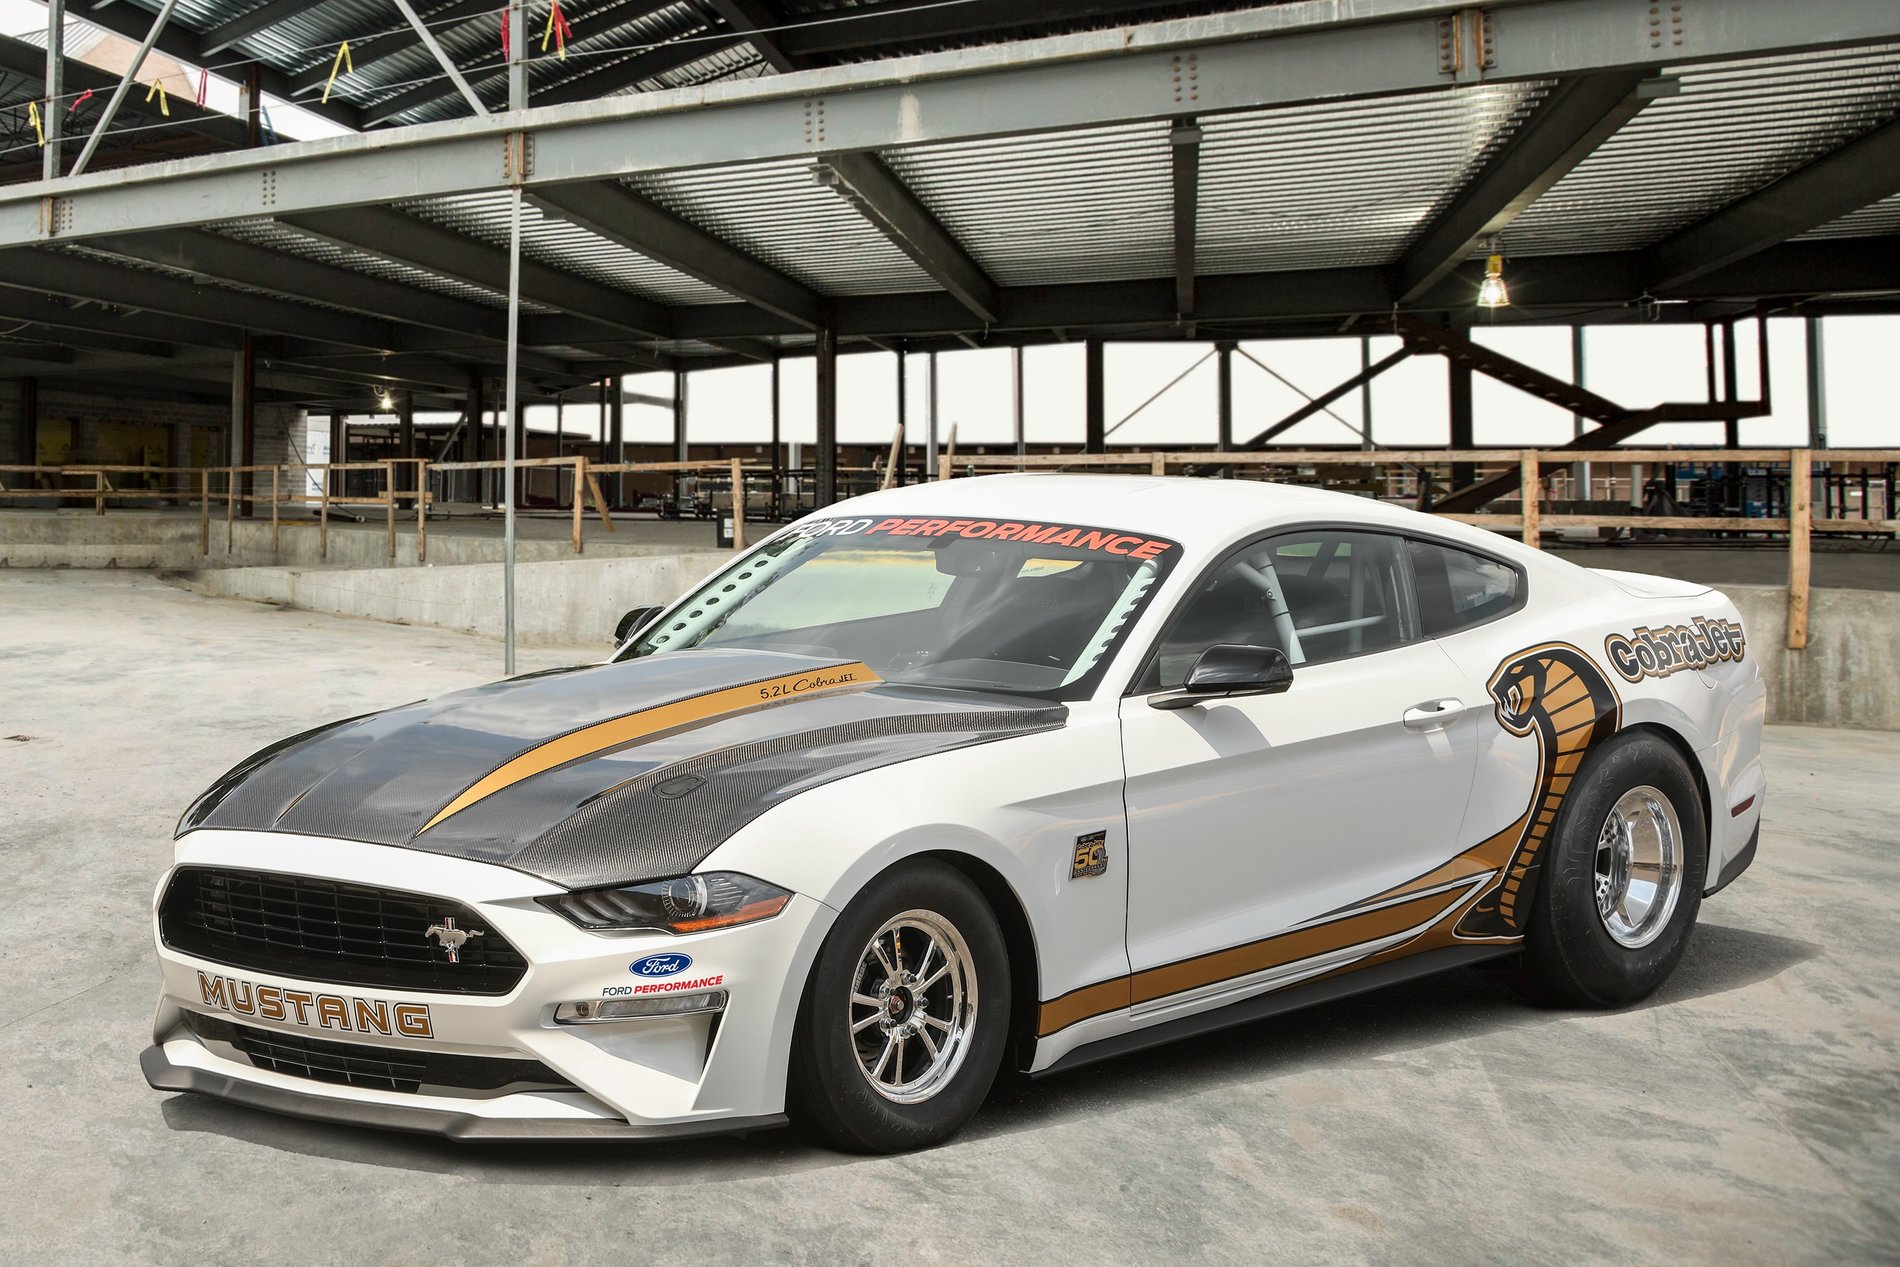 2019 Mustang GT Drag Pack Page 2 2015+ S550 Mustang Forum (GT, EcoBoost, GT350, GT500, Bullitt, Mach 1) Xxx Pic Hd